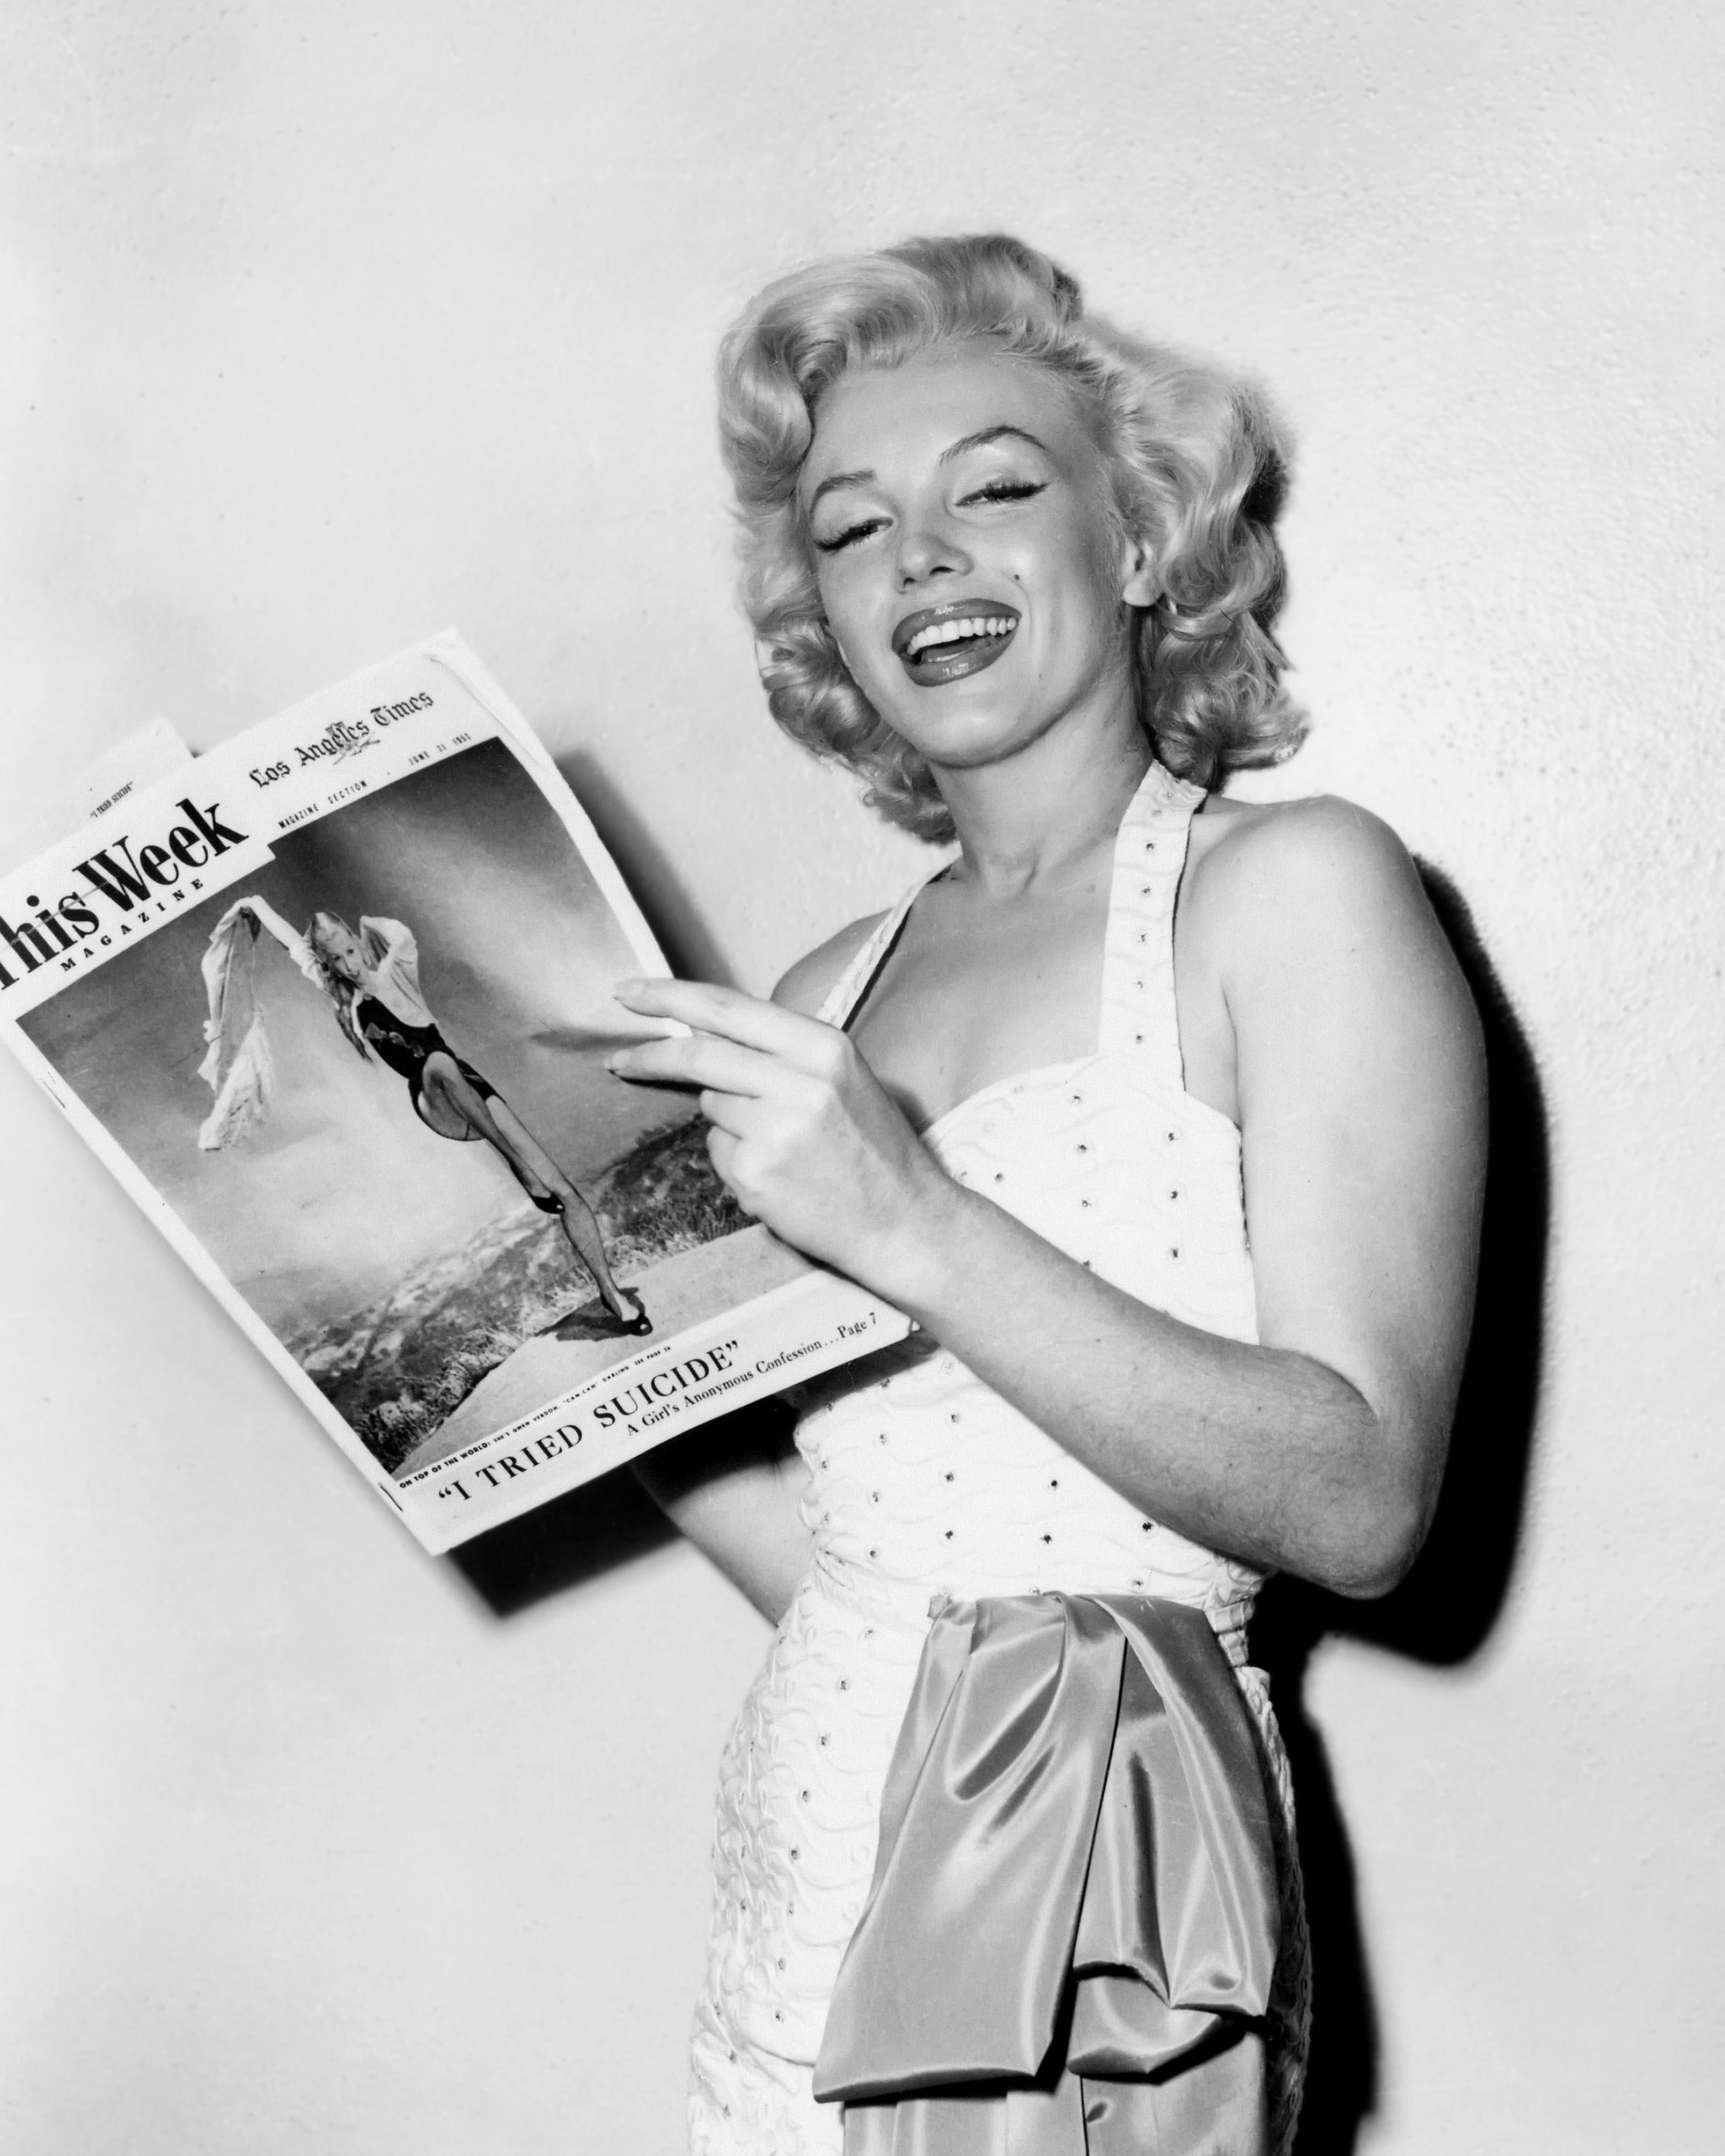 Unknown Portrait Photograph - Marilyn Monroe Smling with Magazine Globe Photos Fine Art Print